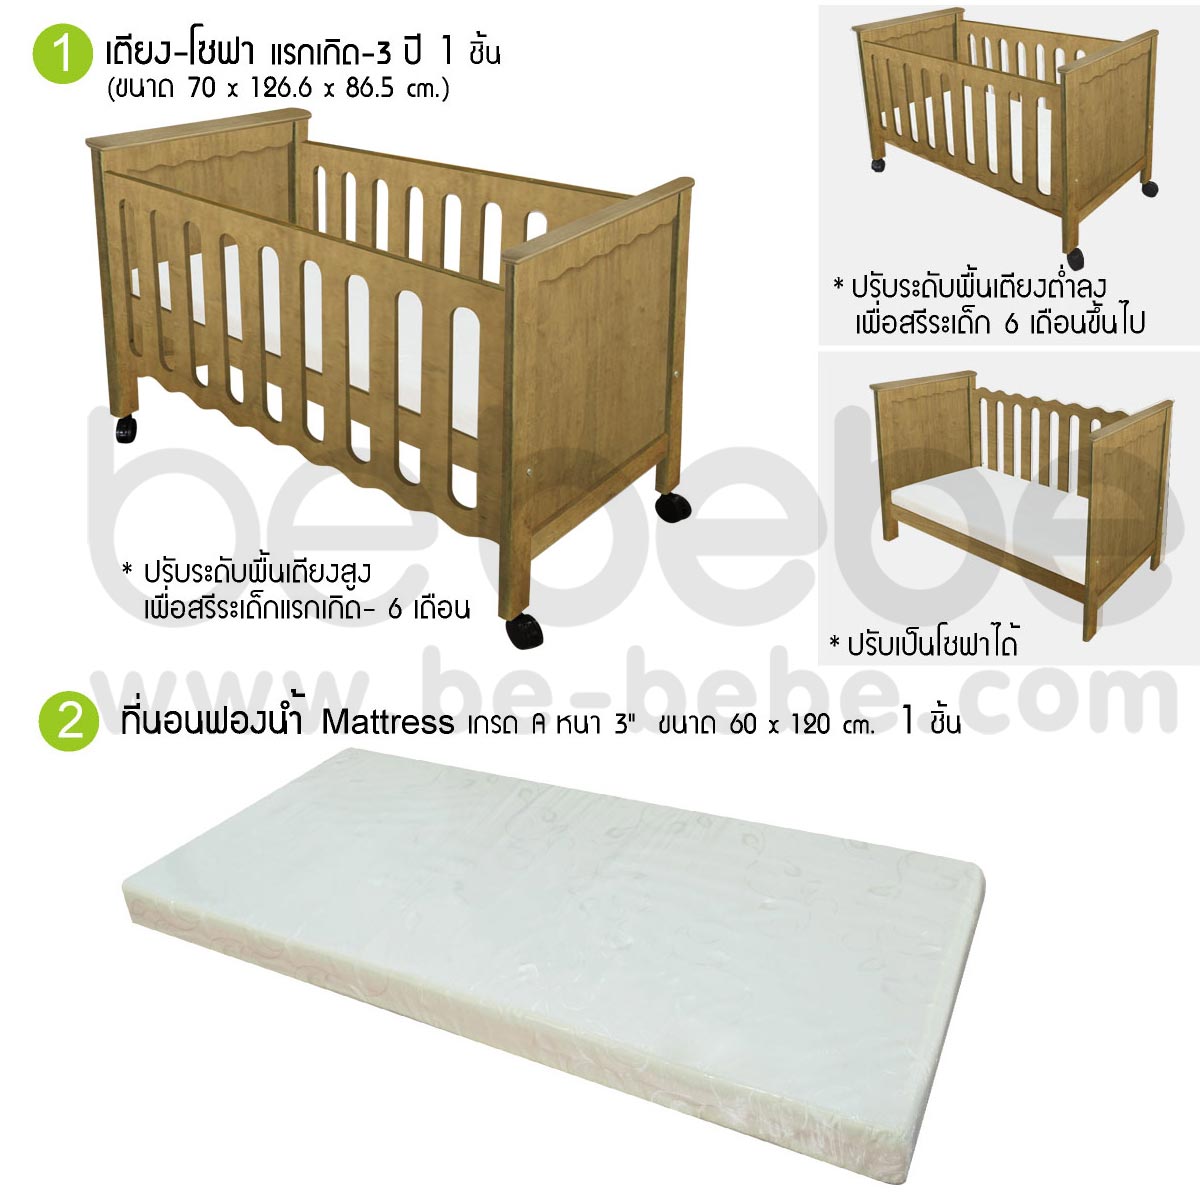 be bebe :Set of Baby&Children Bed/Sofa 0-3 Yrs. (60x120)+Mattress+Bedding set+Wardrobe+Mini Chest/Light Brown